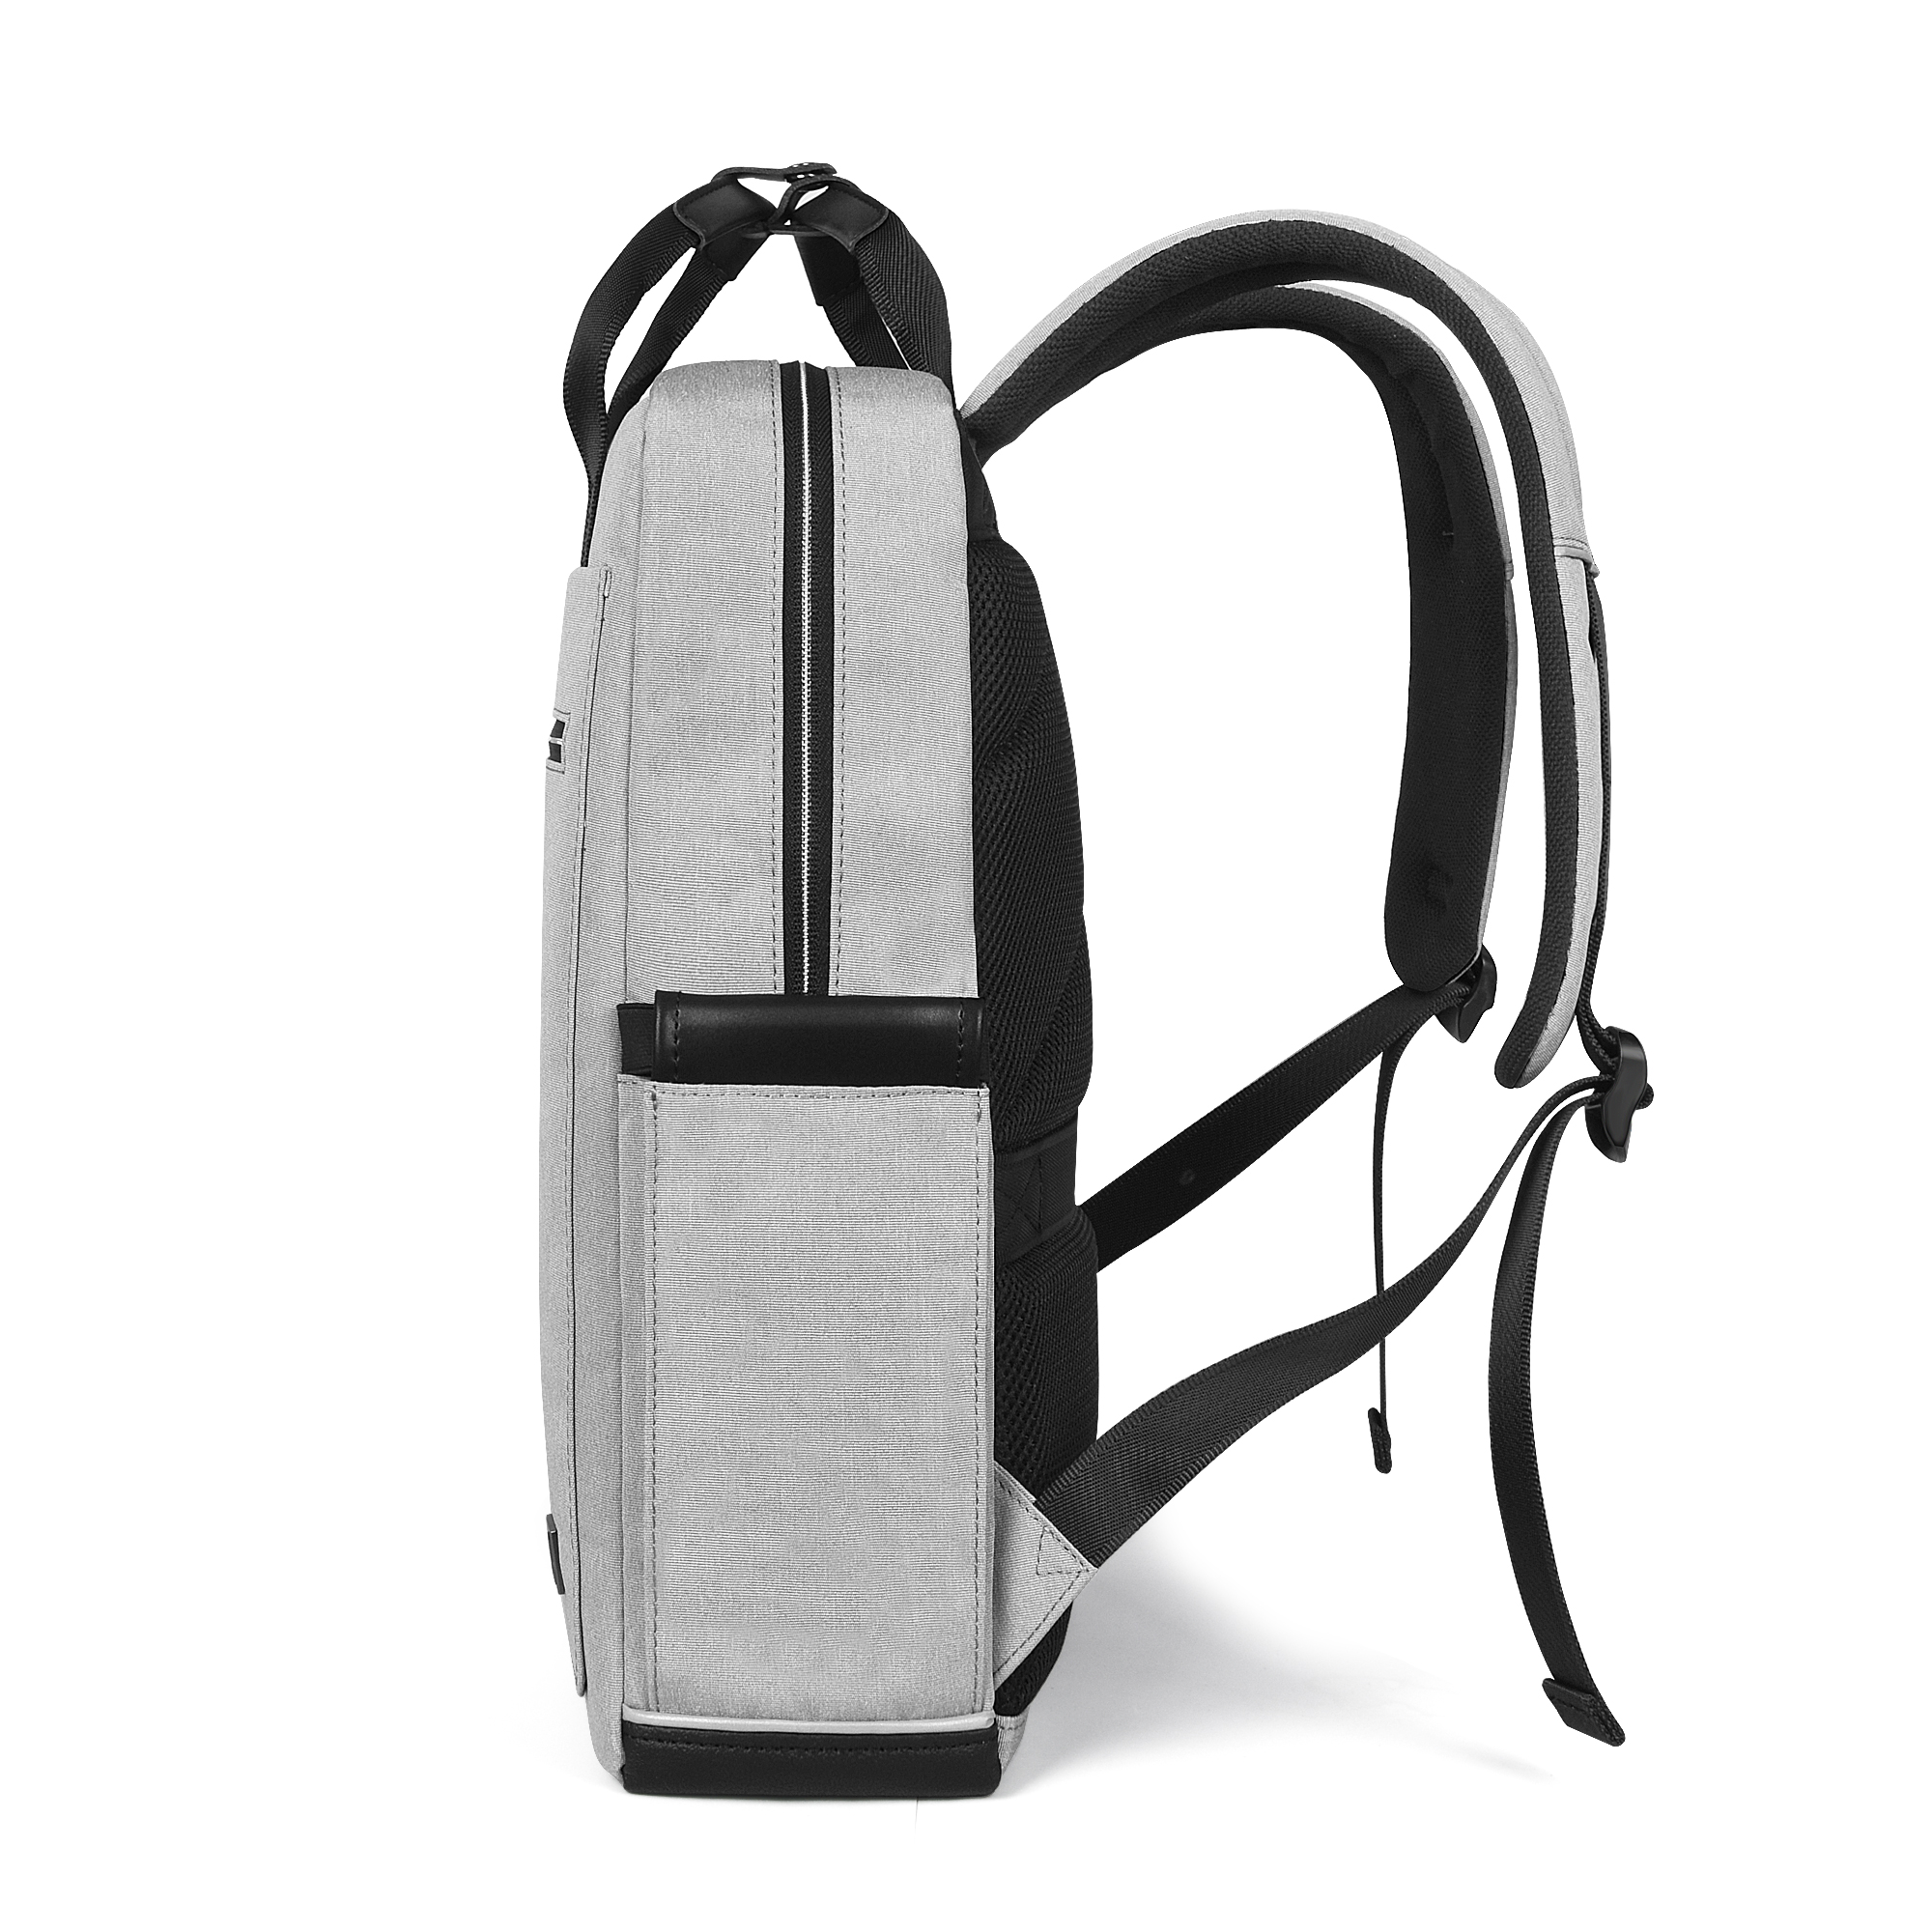 WiWU Pioneer Pro Backpack Waterproof Anti Theft Business Travel Laptop Bag 15.6inch